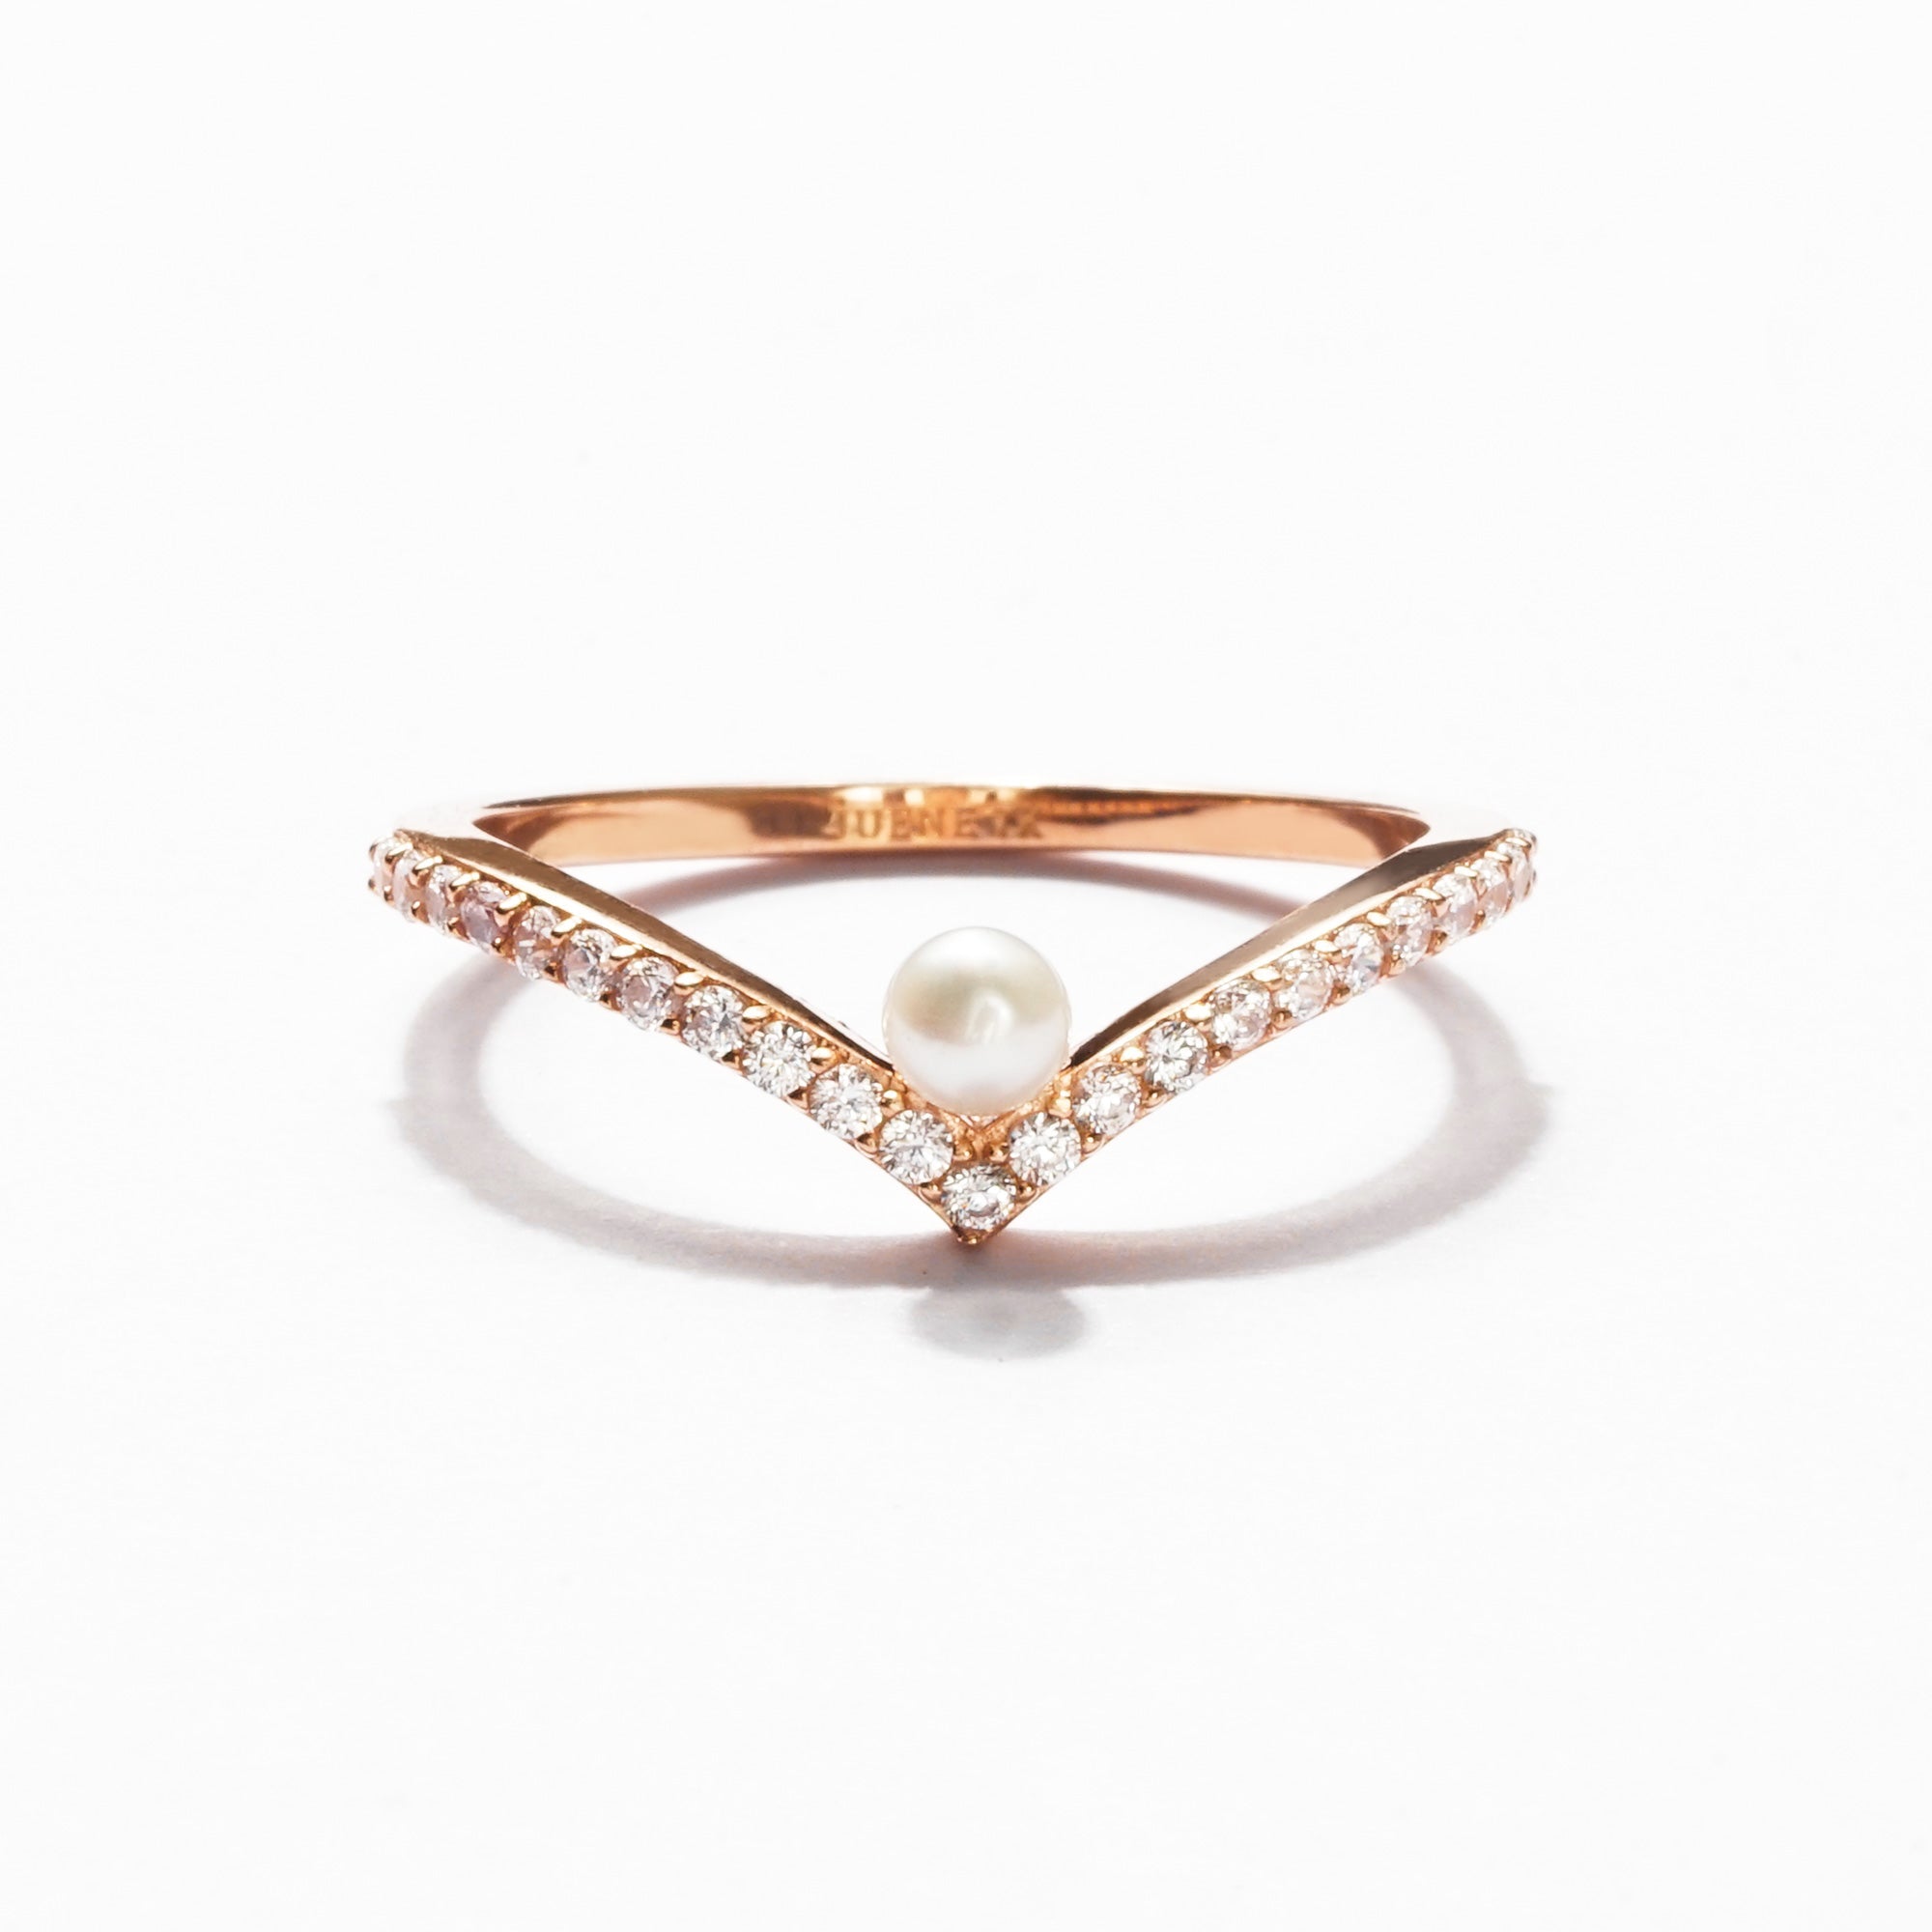 Juene Jewelry - AUREL PEARL GOLD RING - Juene Jewelry